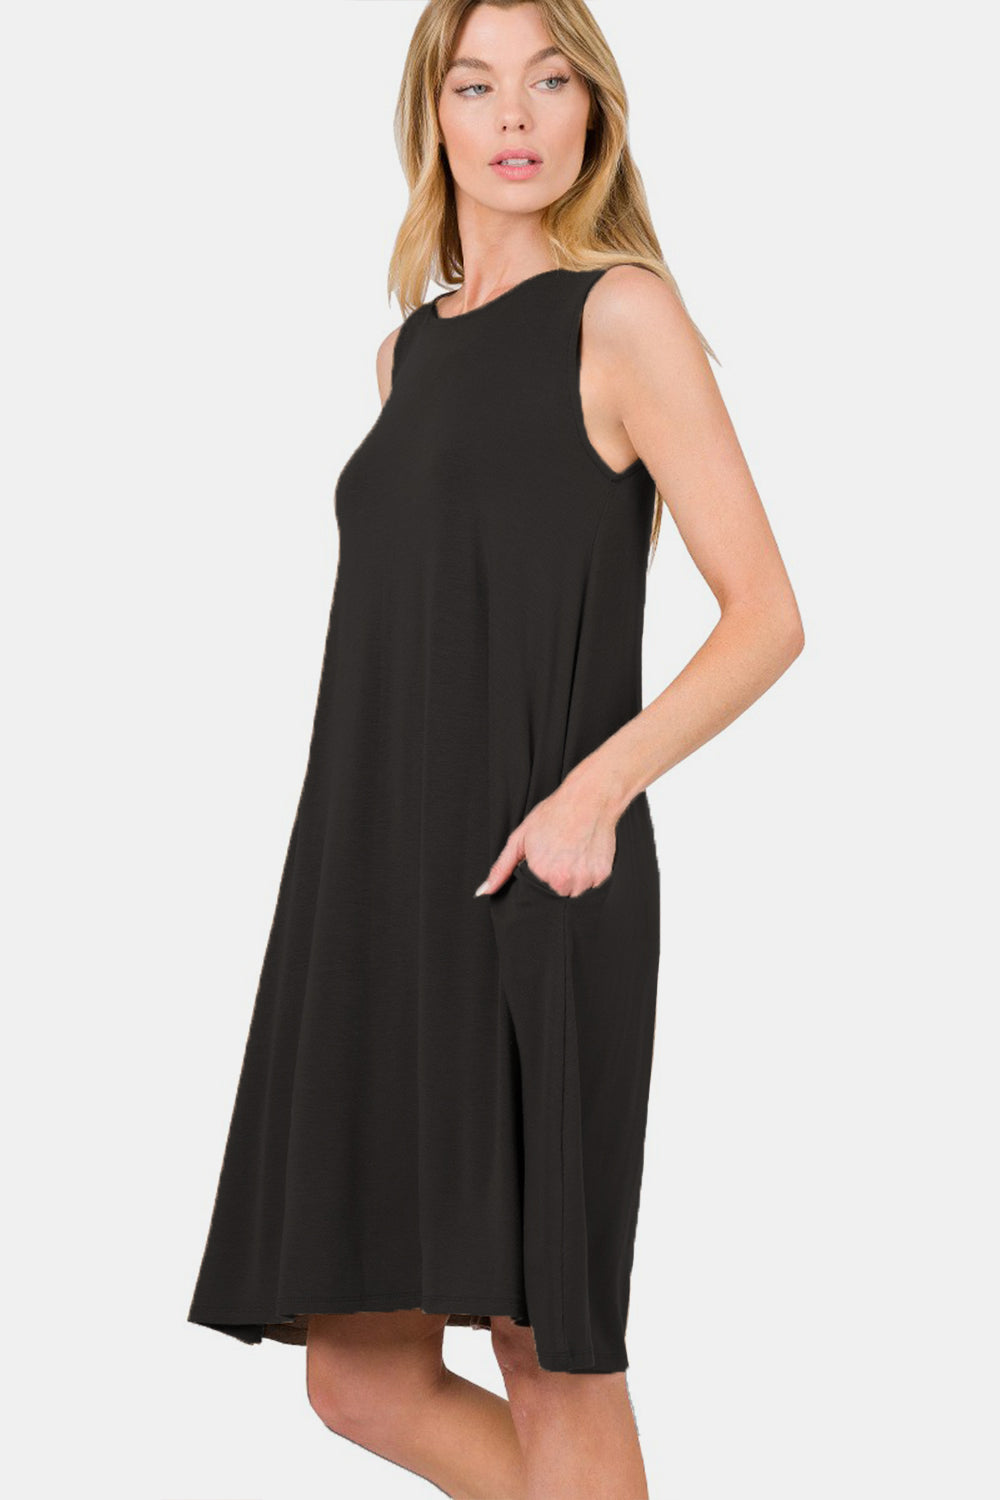 Zenana Black Sleeveless Flared Dress with Side Pockets Trendsi